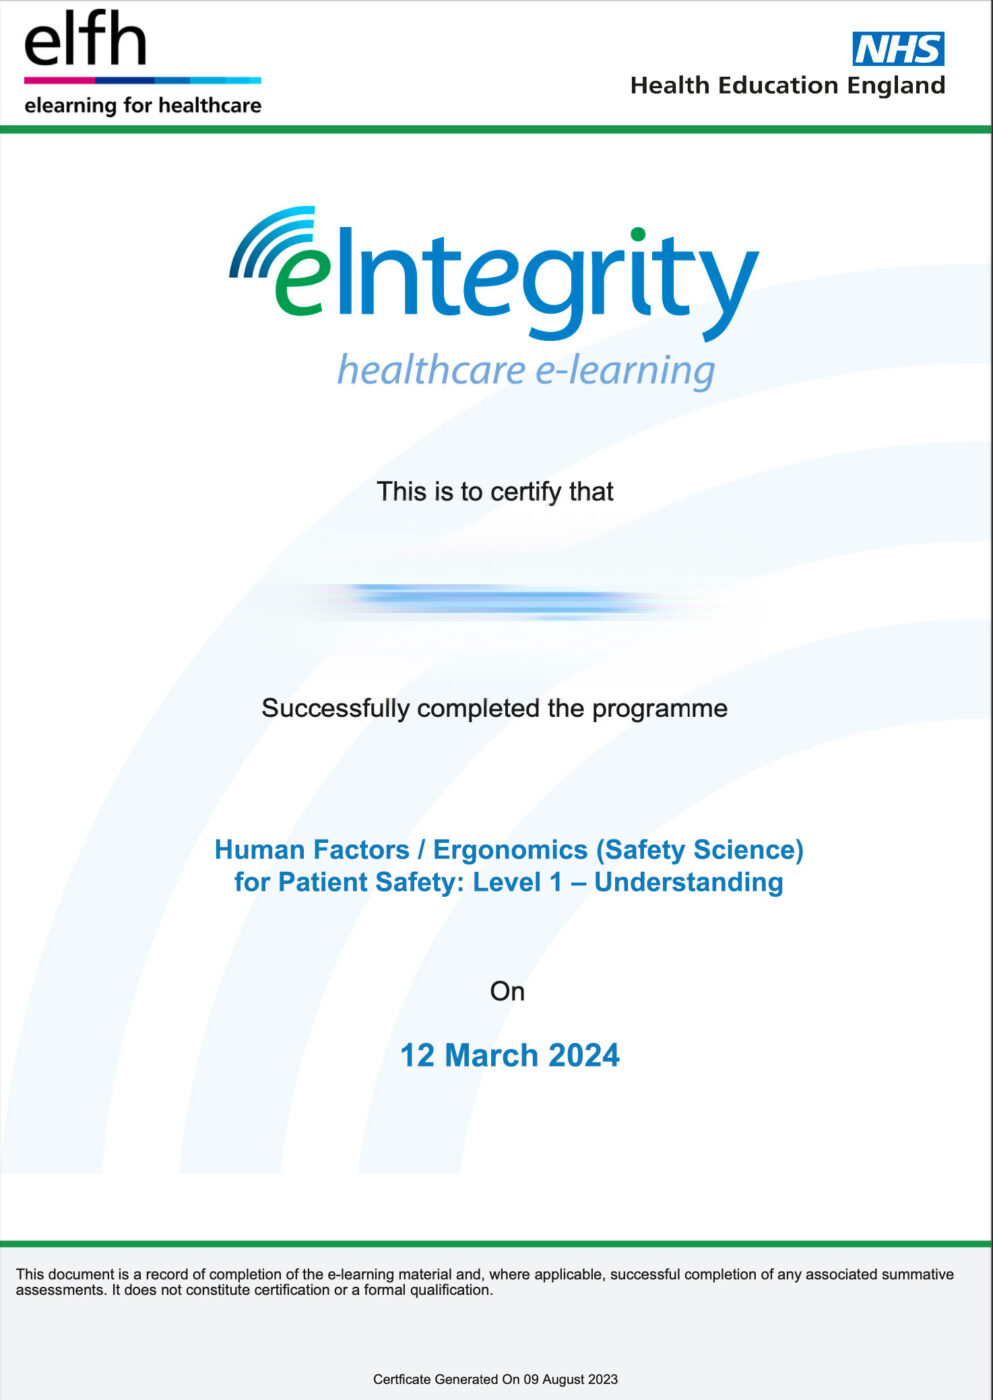 Human Factors / Ergonomics (Safety Science) for Patient Safety: Level 1 – Understanding